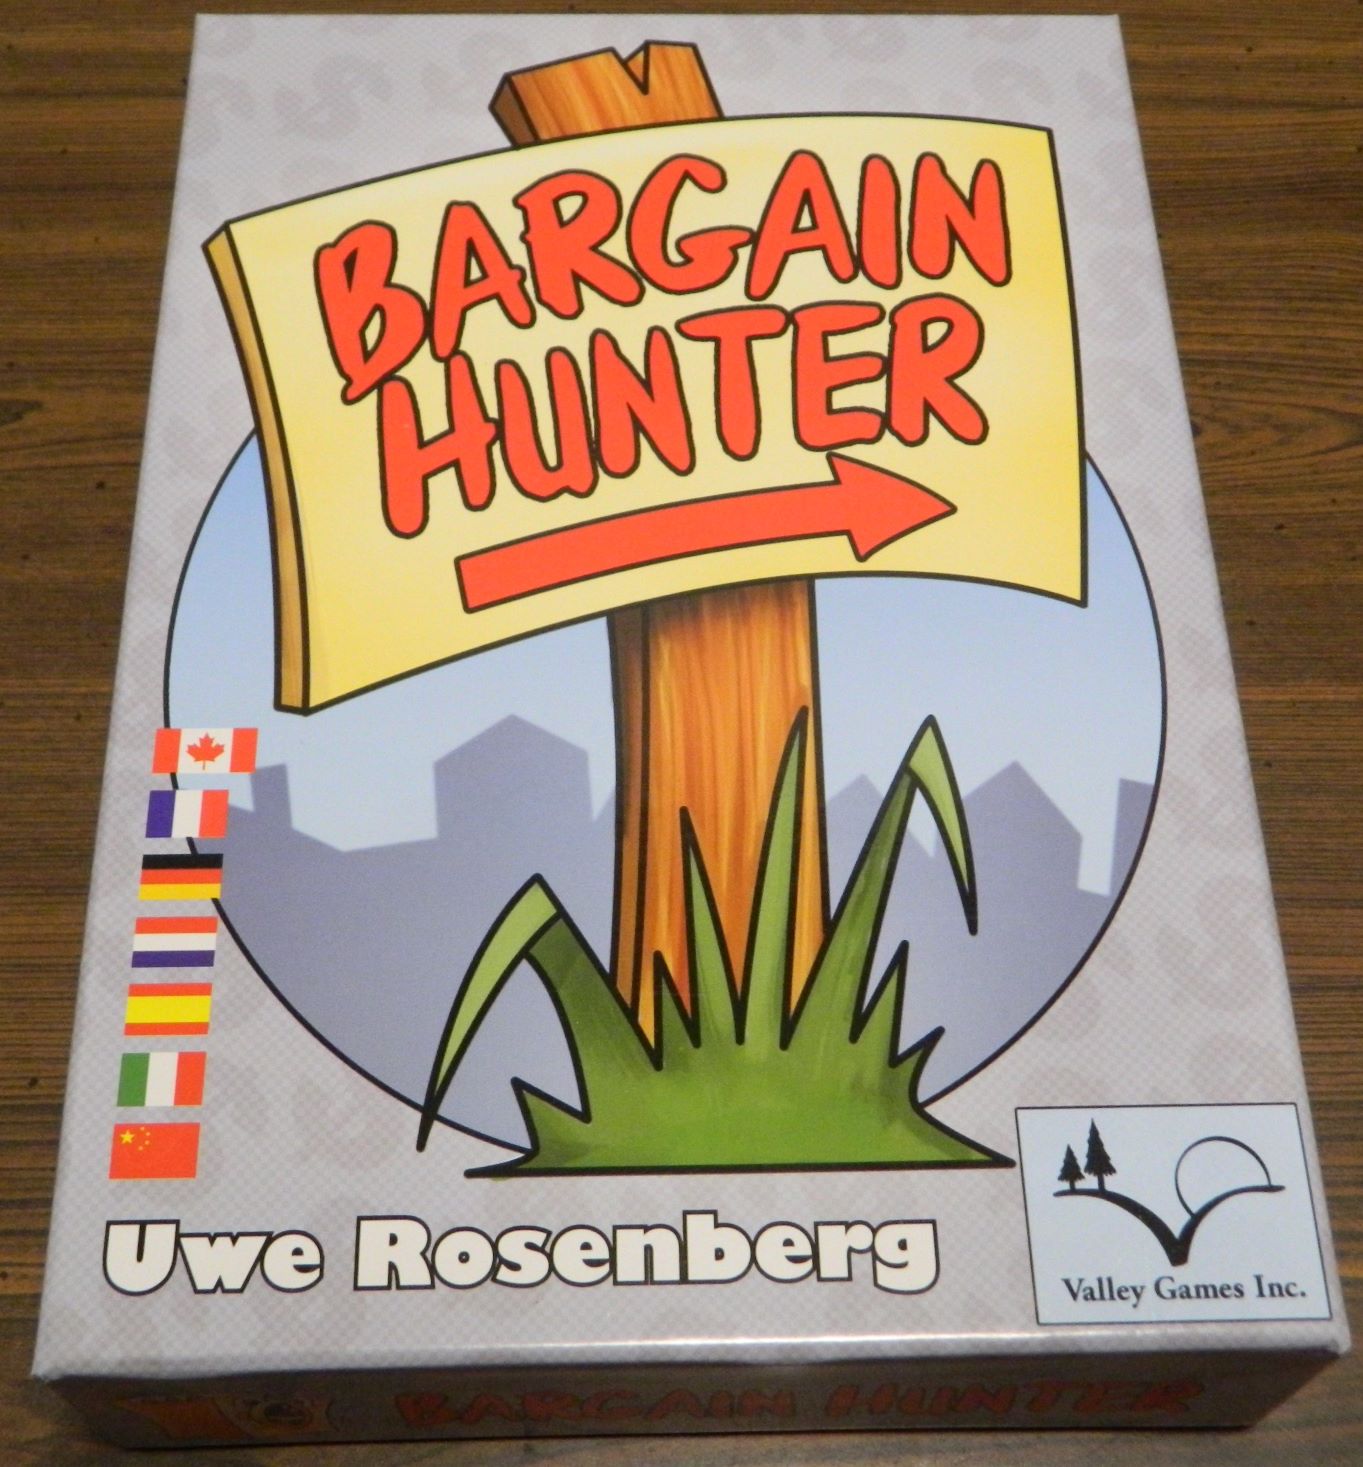 Bargain Hunter (1998 Uwe Rosenberg) Card Game Review and Rules